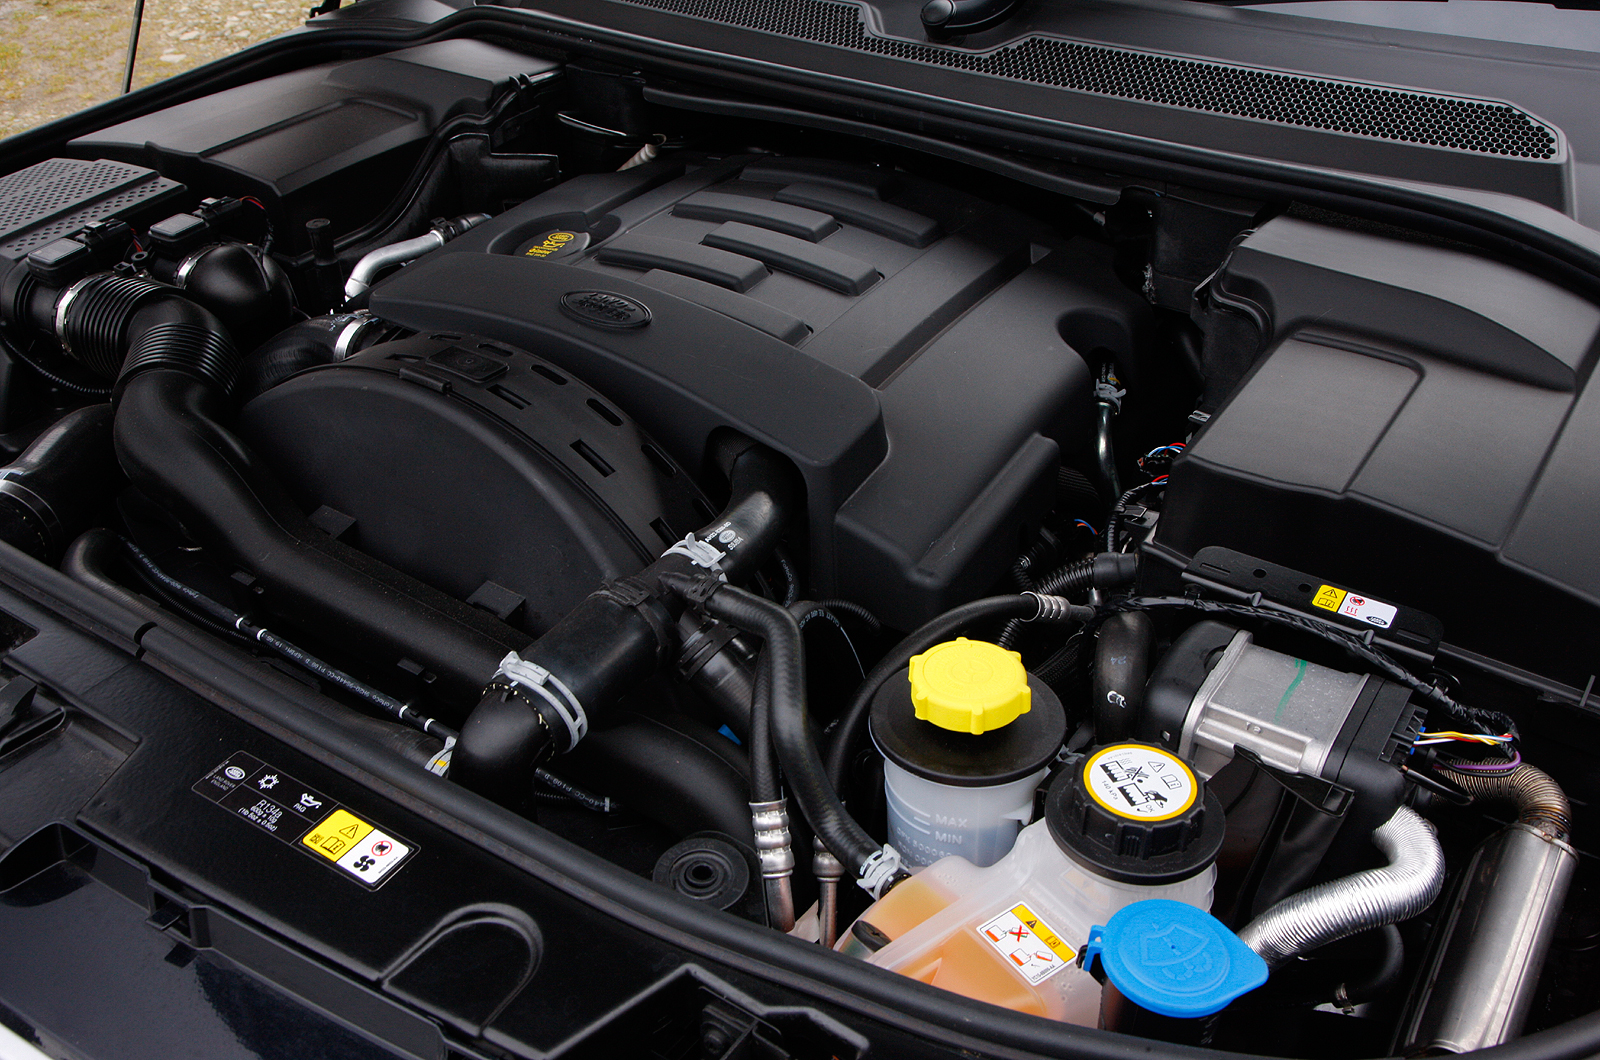 Longitudinal Range Rover Sport engine